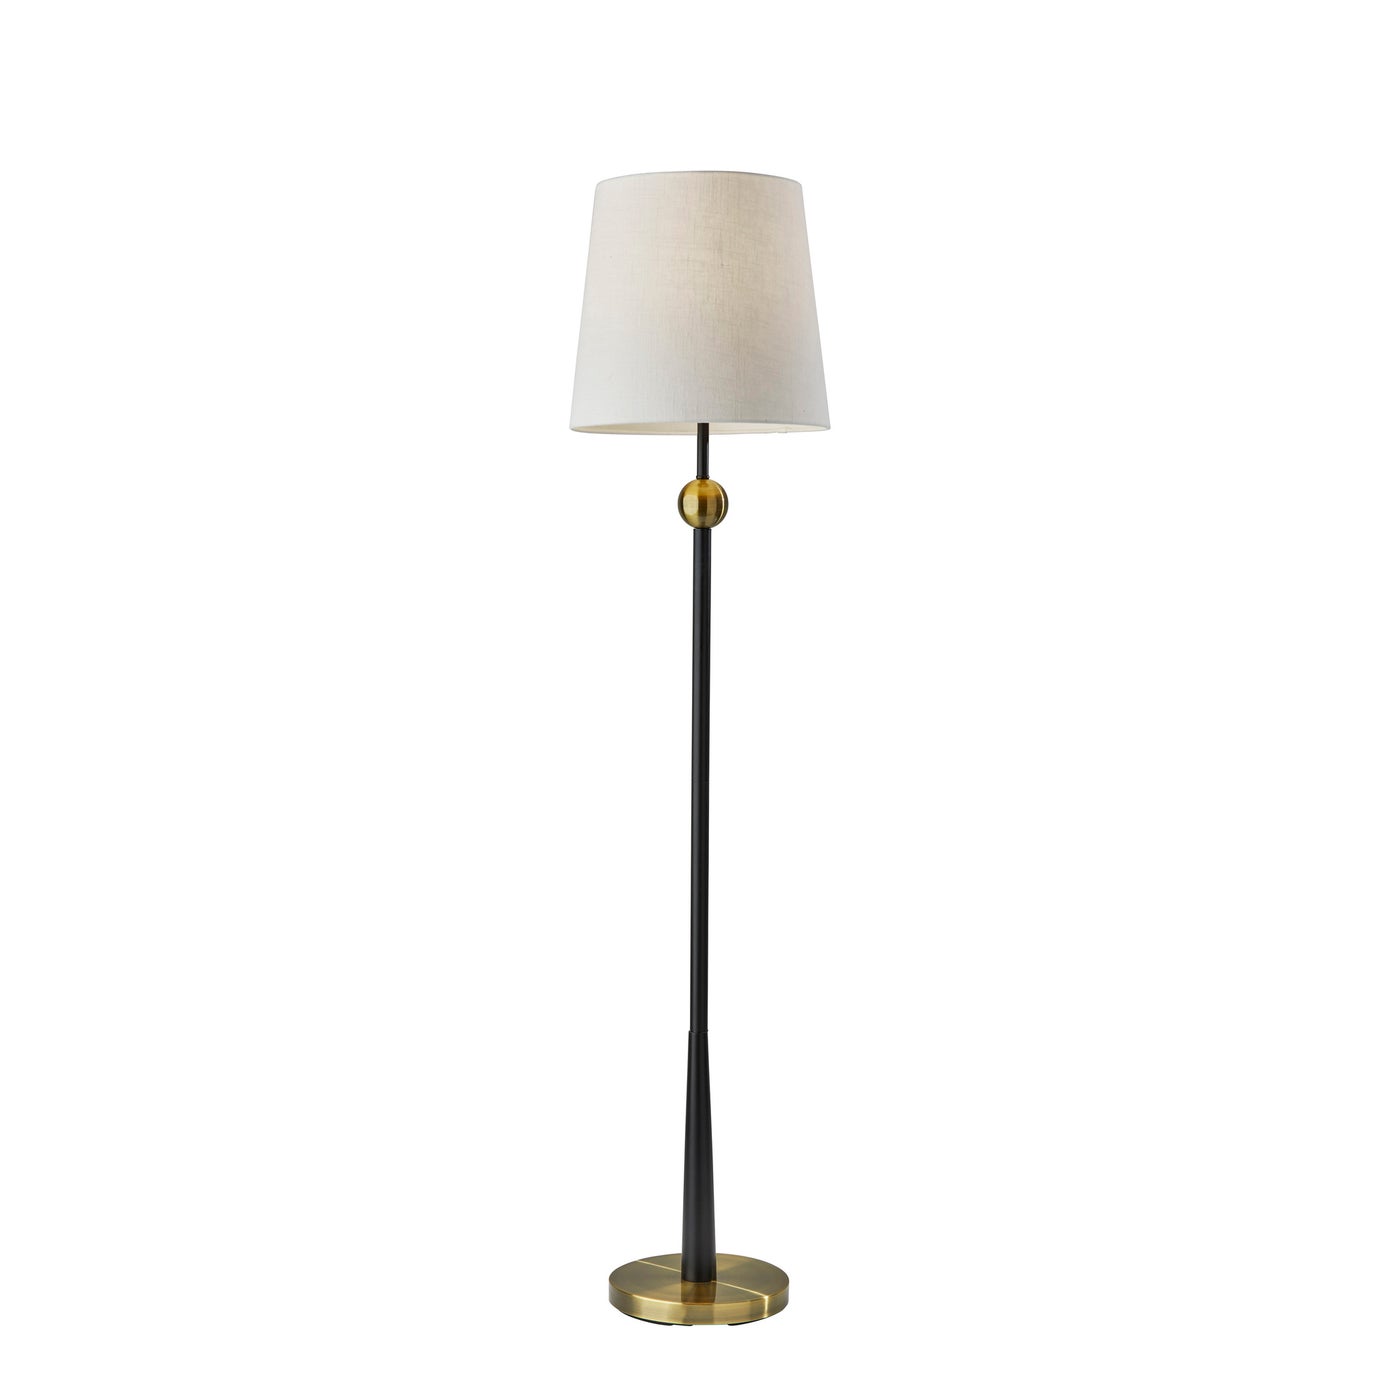 Adesso Home - 1575-01 - Floor Lamp - Francis - Black & Antique Brass